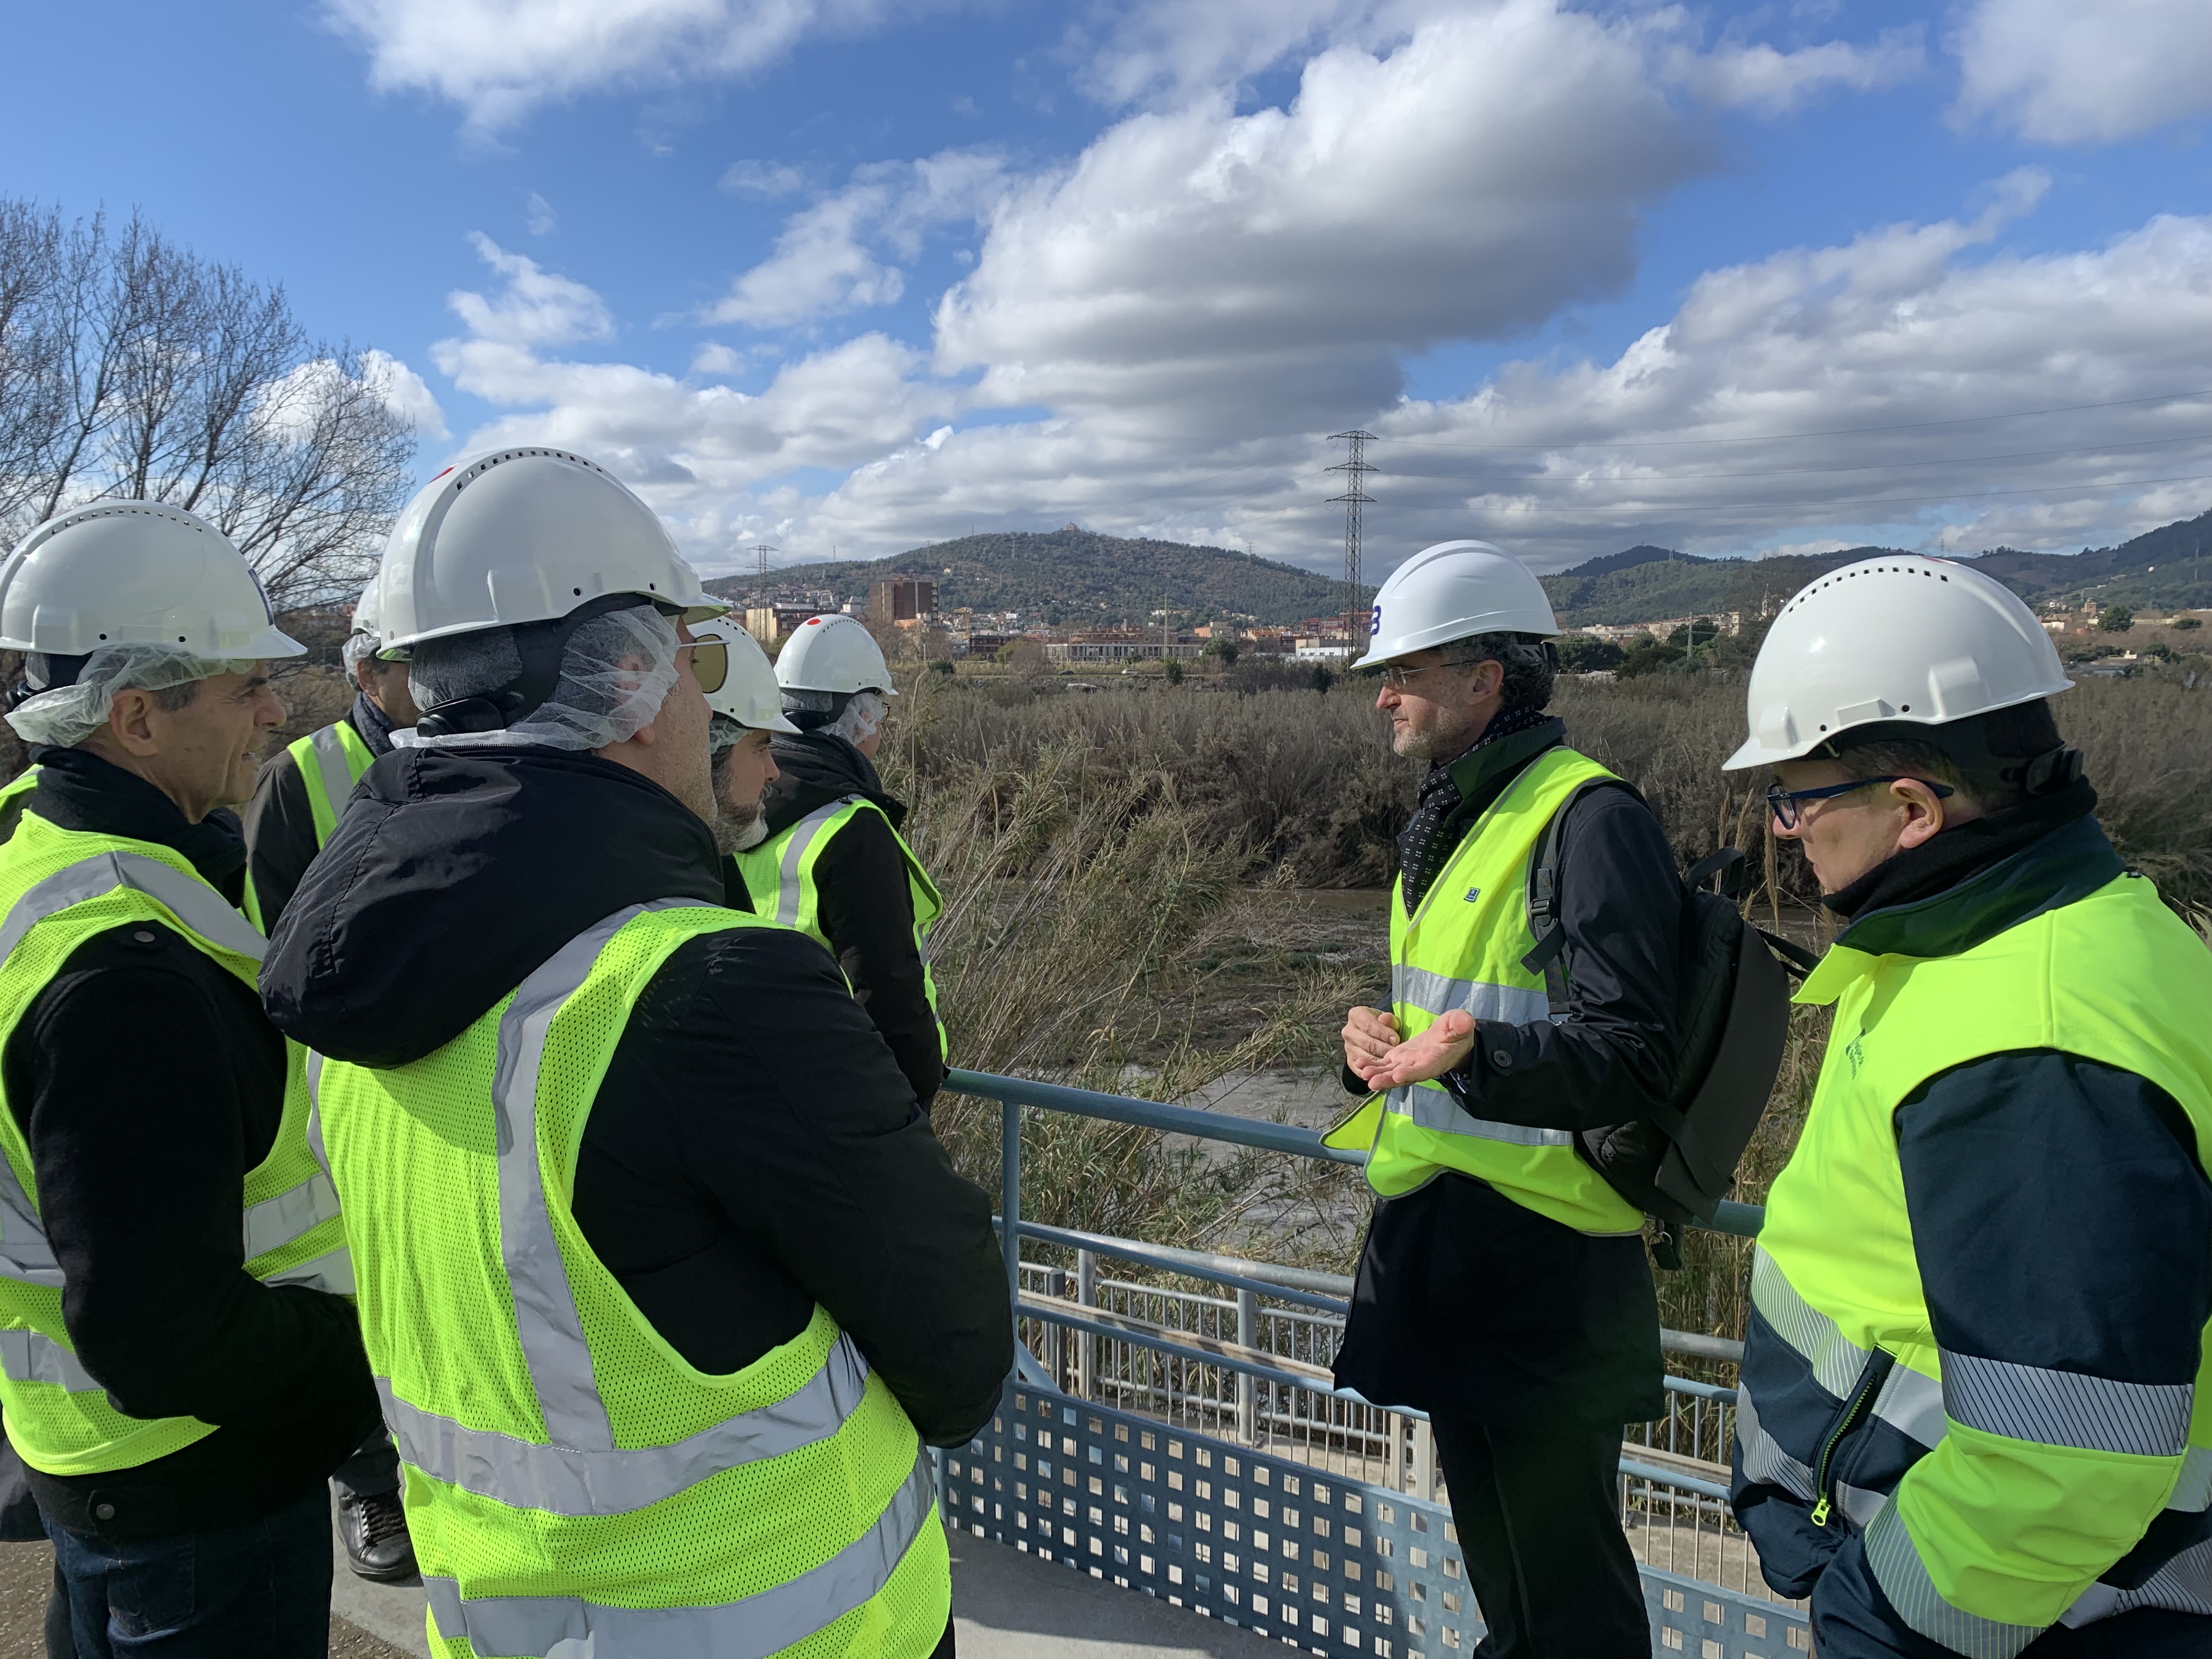 CCBC visita a la depuradora de AGBAR: visita exclusiva a la depuradora de Agbar en Sant Joan Despí